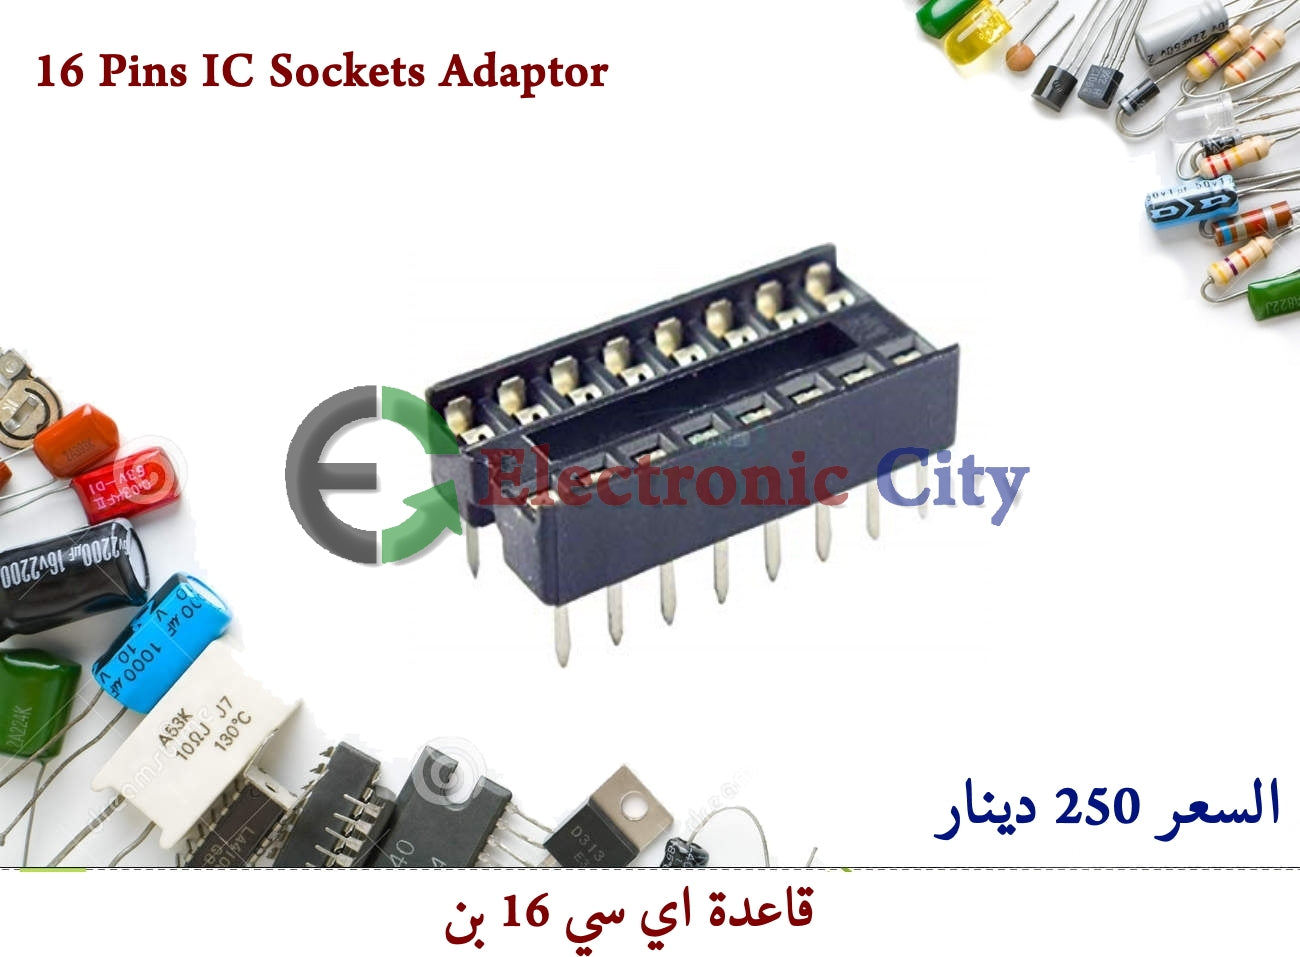 16 Pins IC Sockets Adaptor